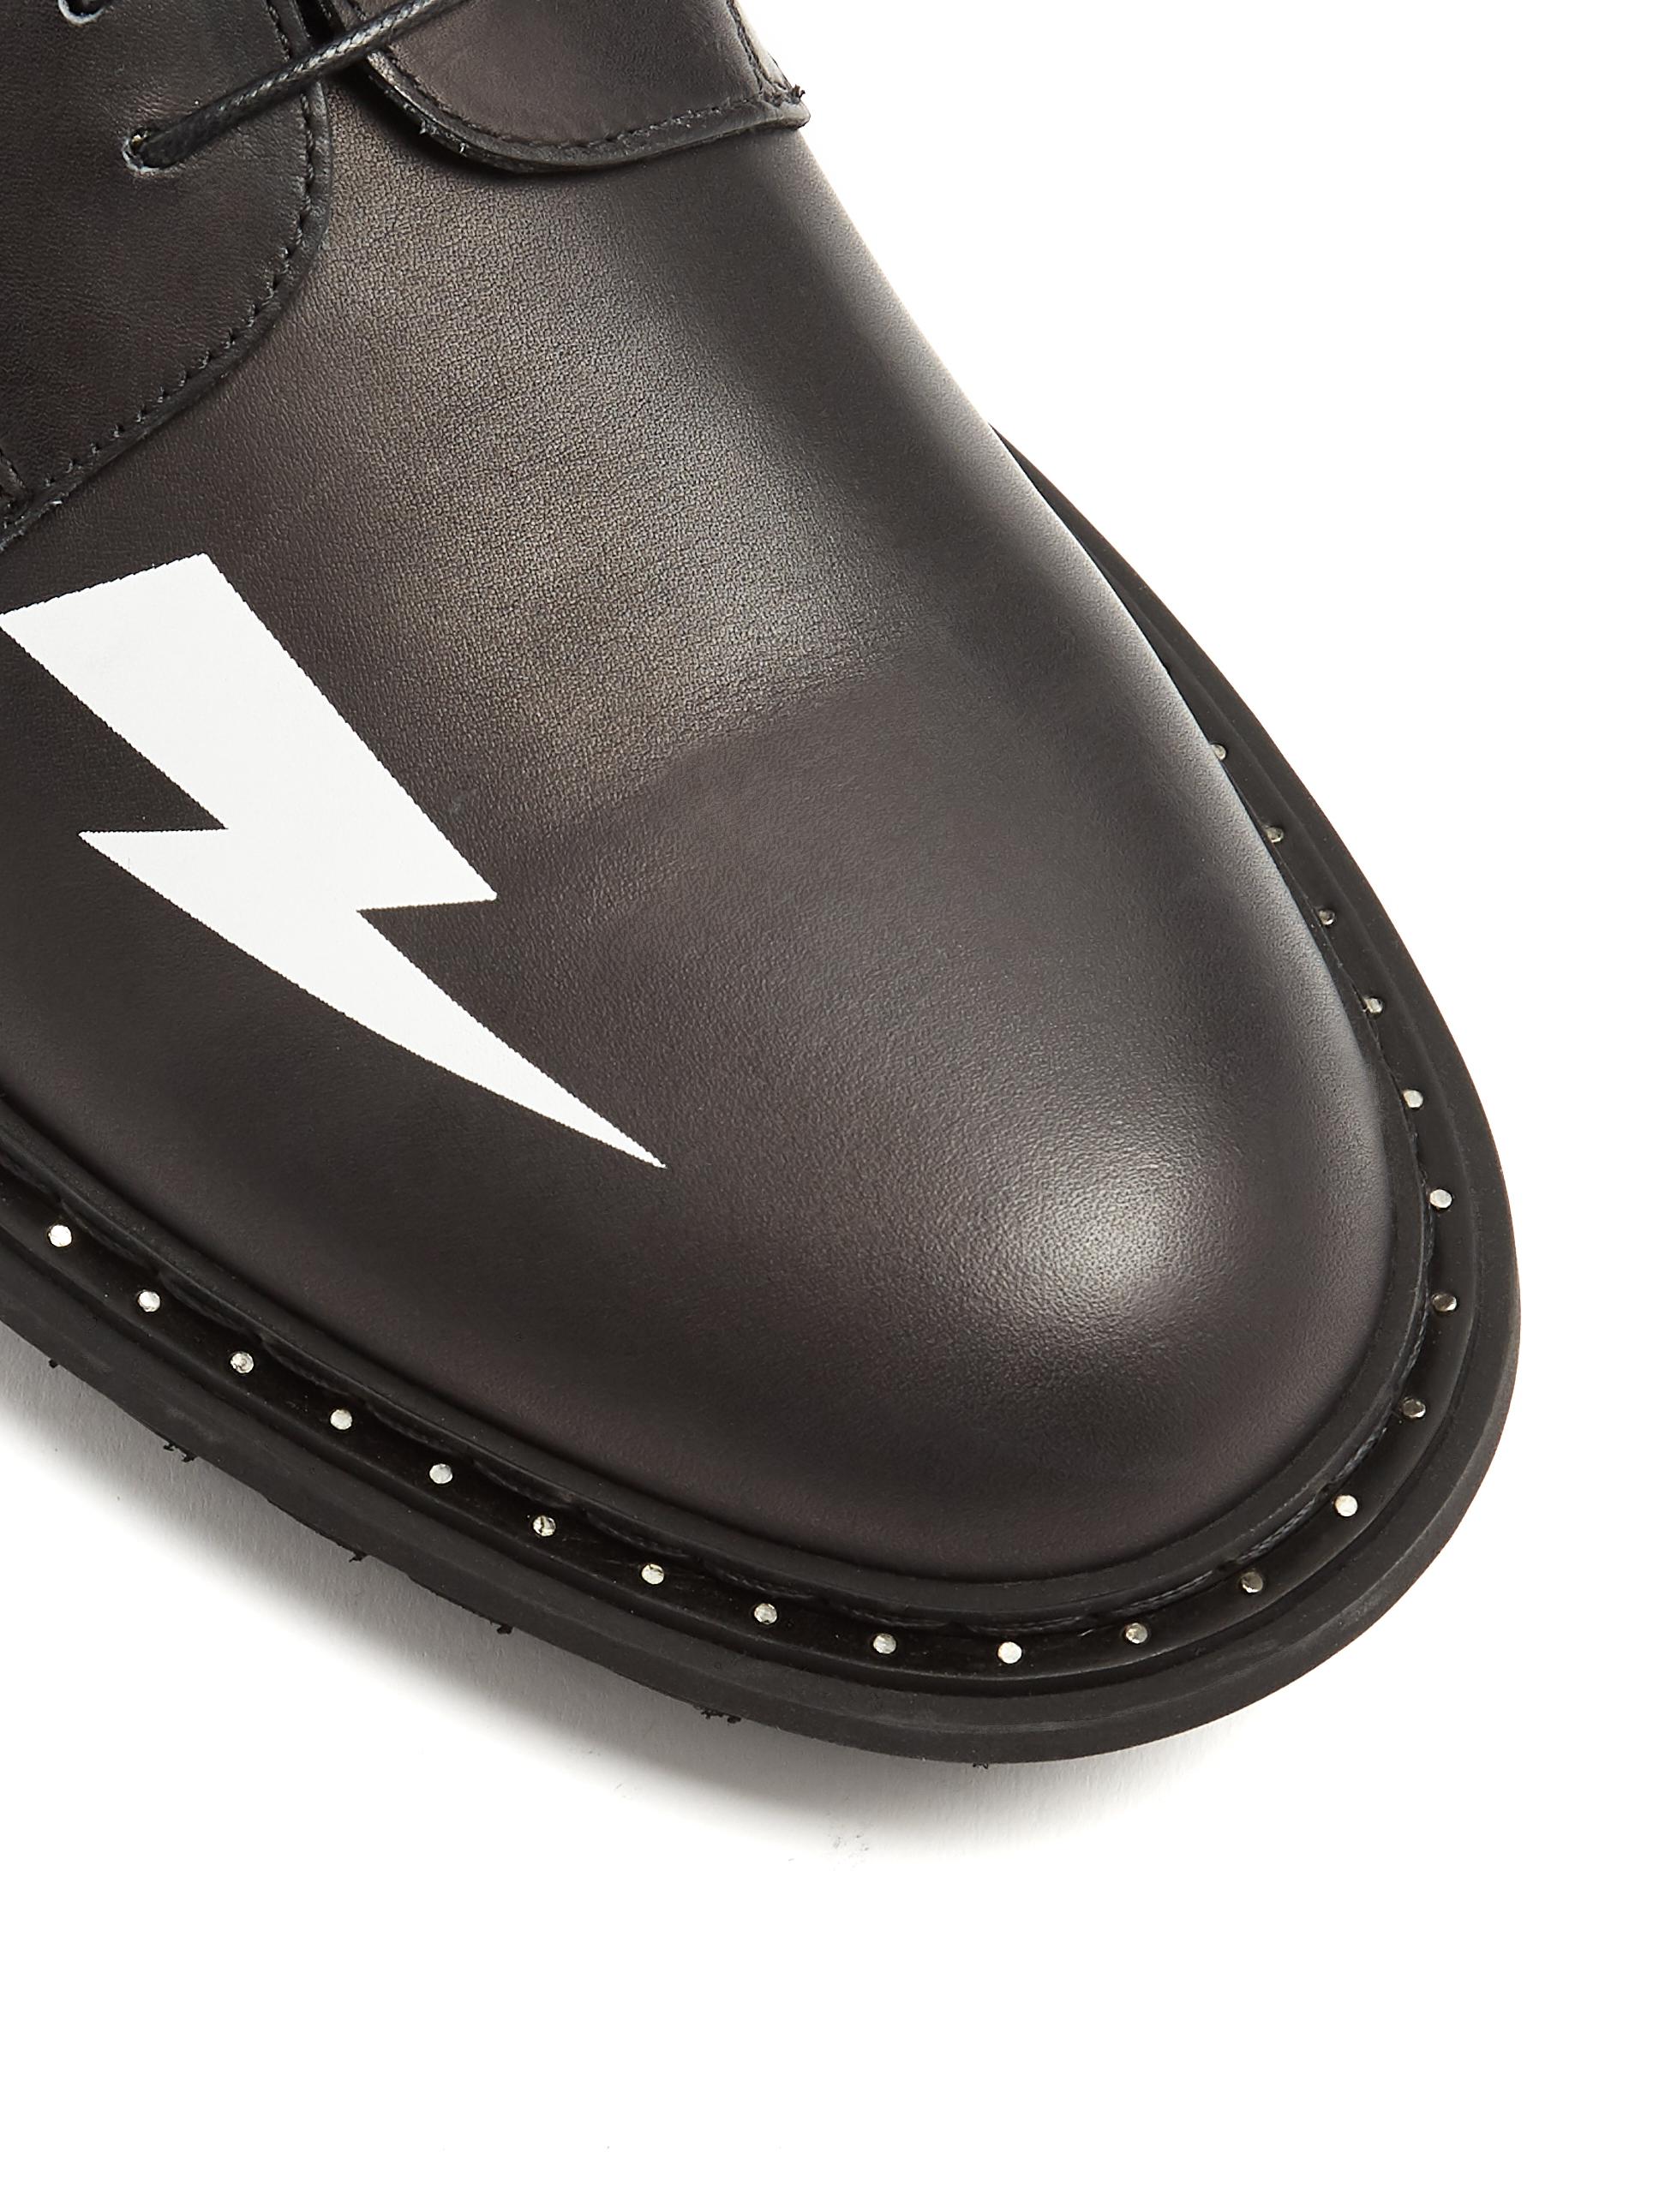 Neil Barrett Lightningbolt Leather Derby Shoes in Black